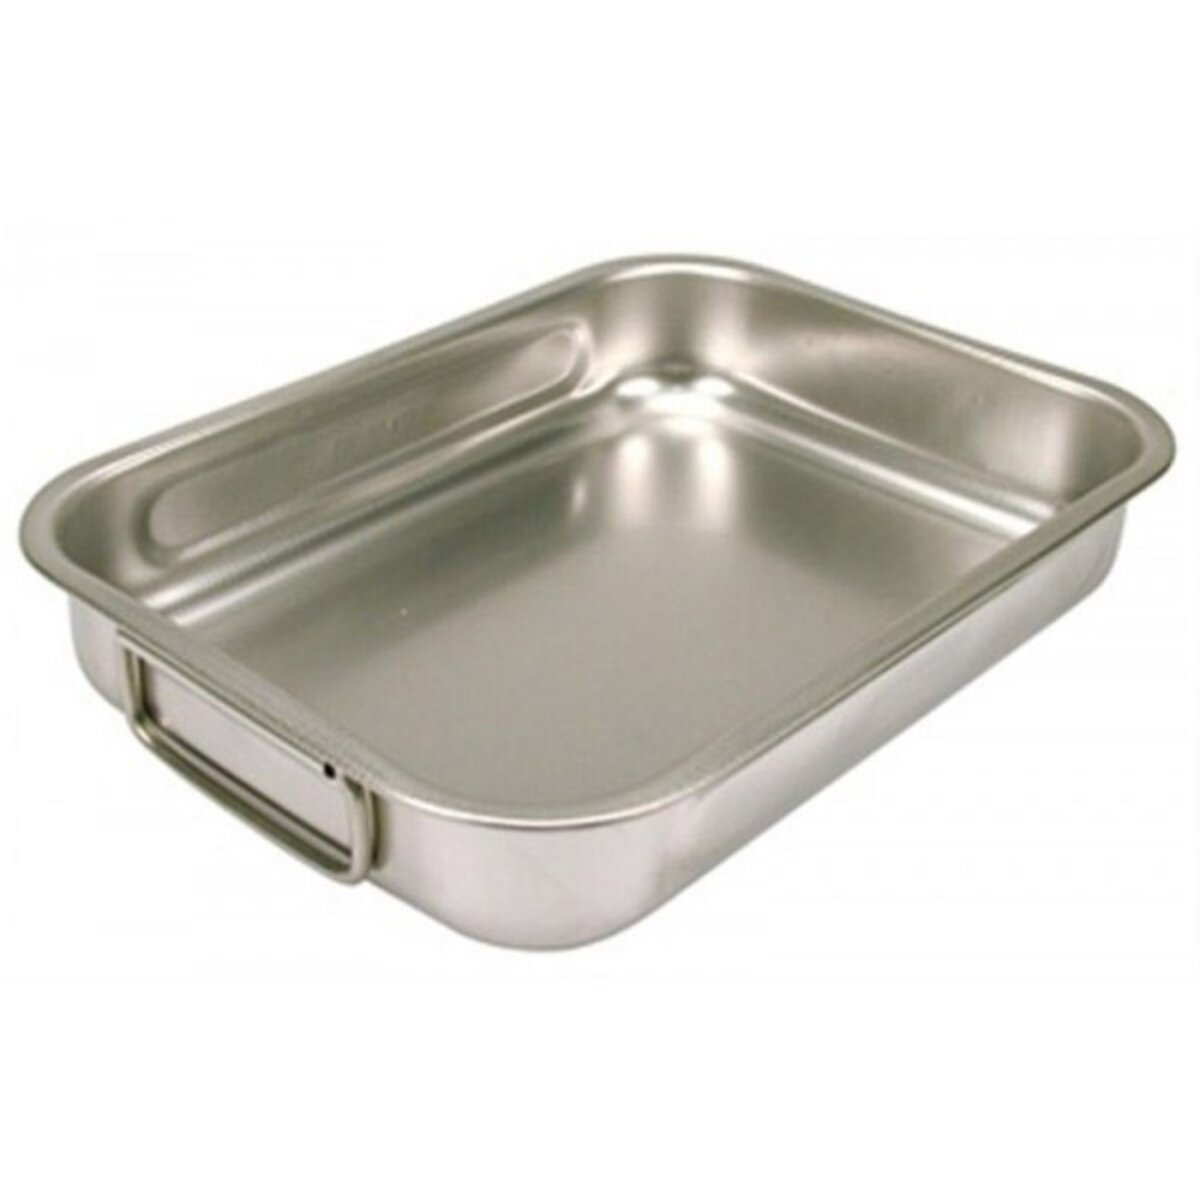 Steel pan Plat à four inox 25x19cm - 10180